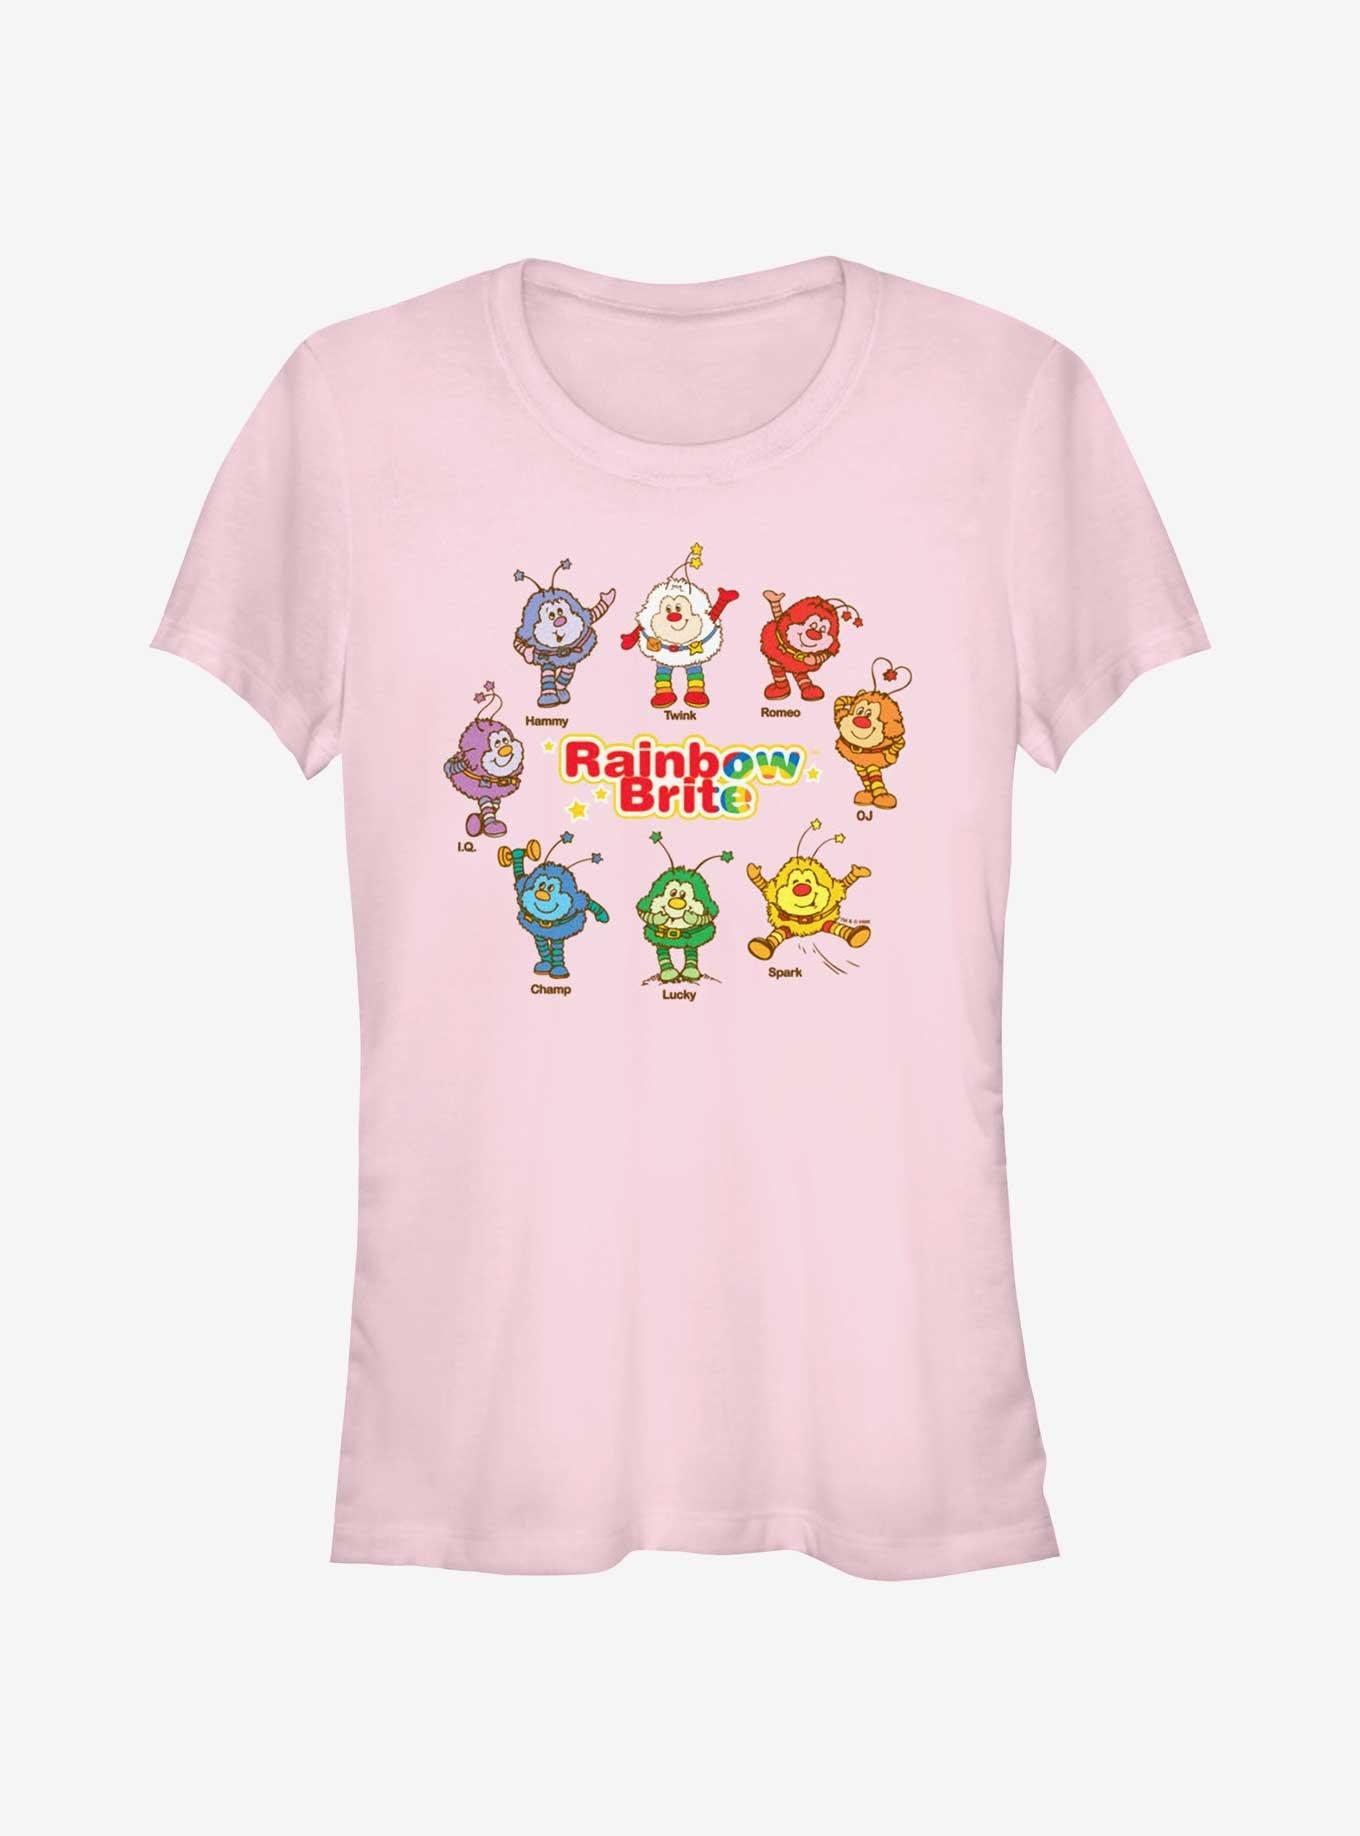 Rainbow Brite Sprites Textbook Girls T-Shirt, LIGHT PINK, hi-res